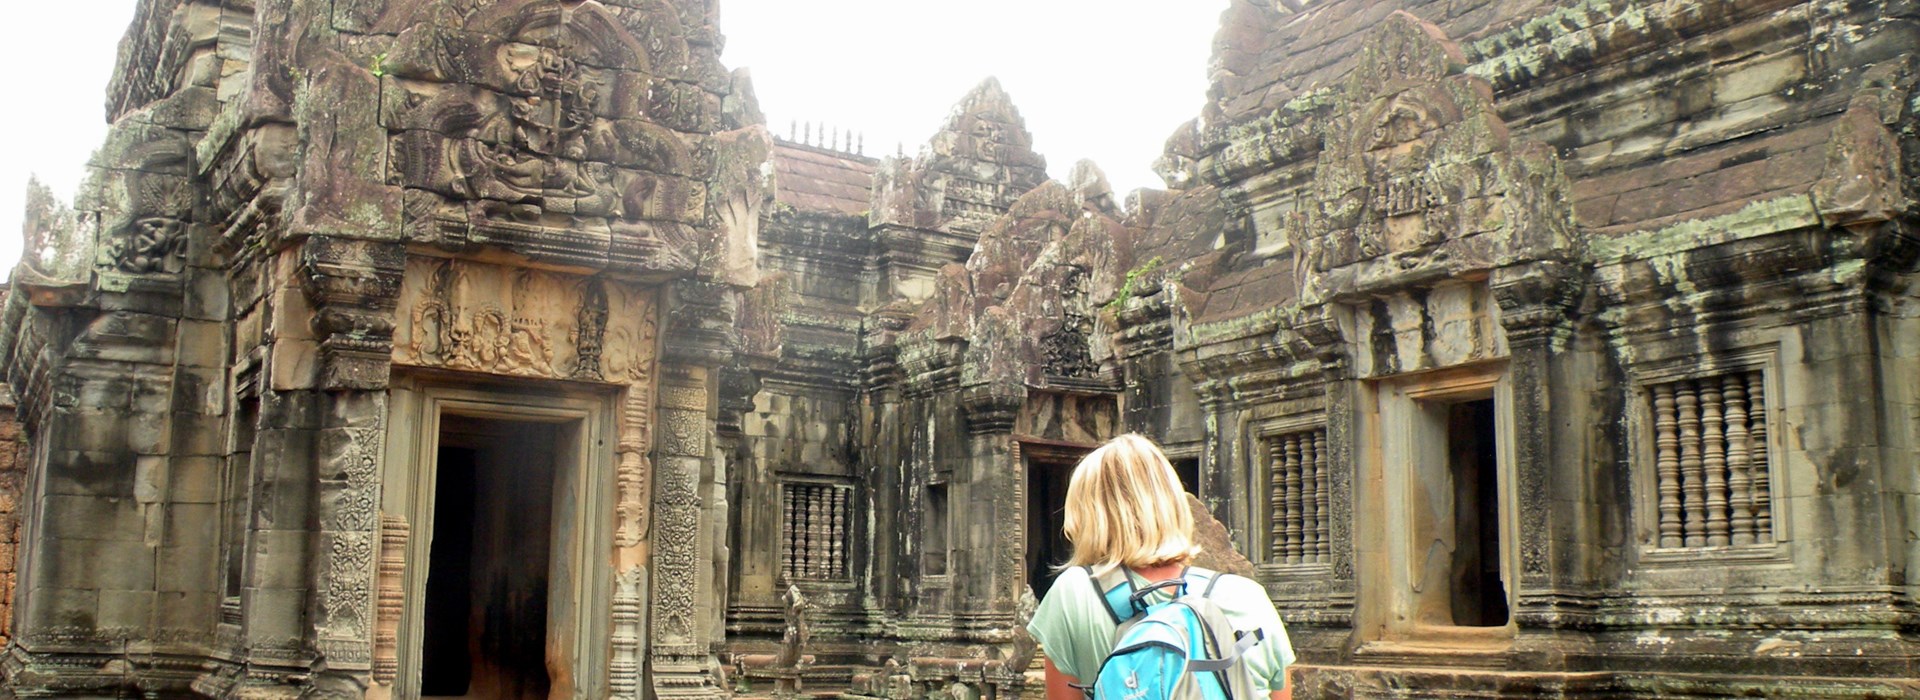 Visiter Banteay Srei - Cambodge